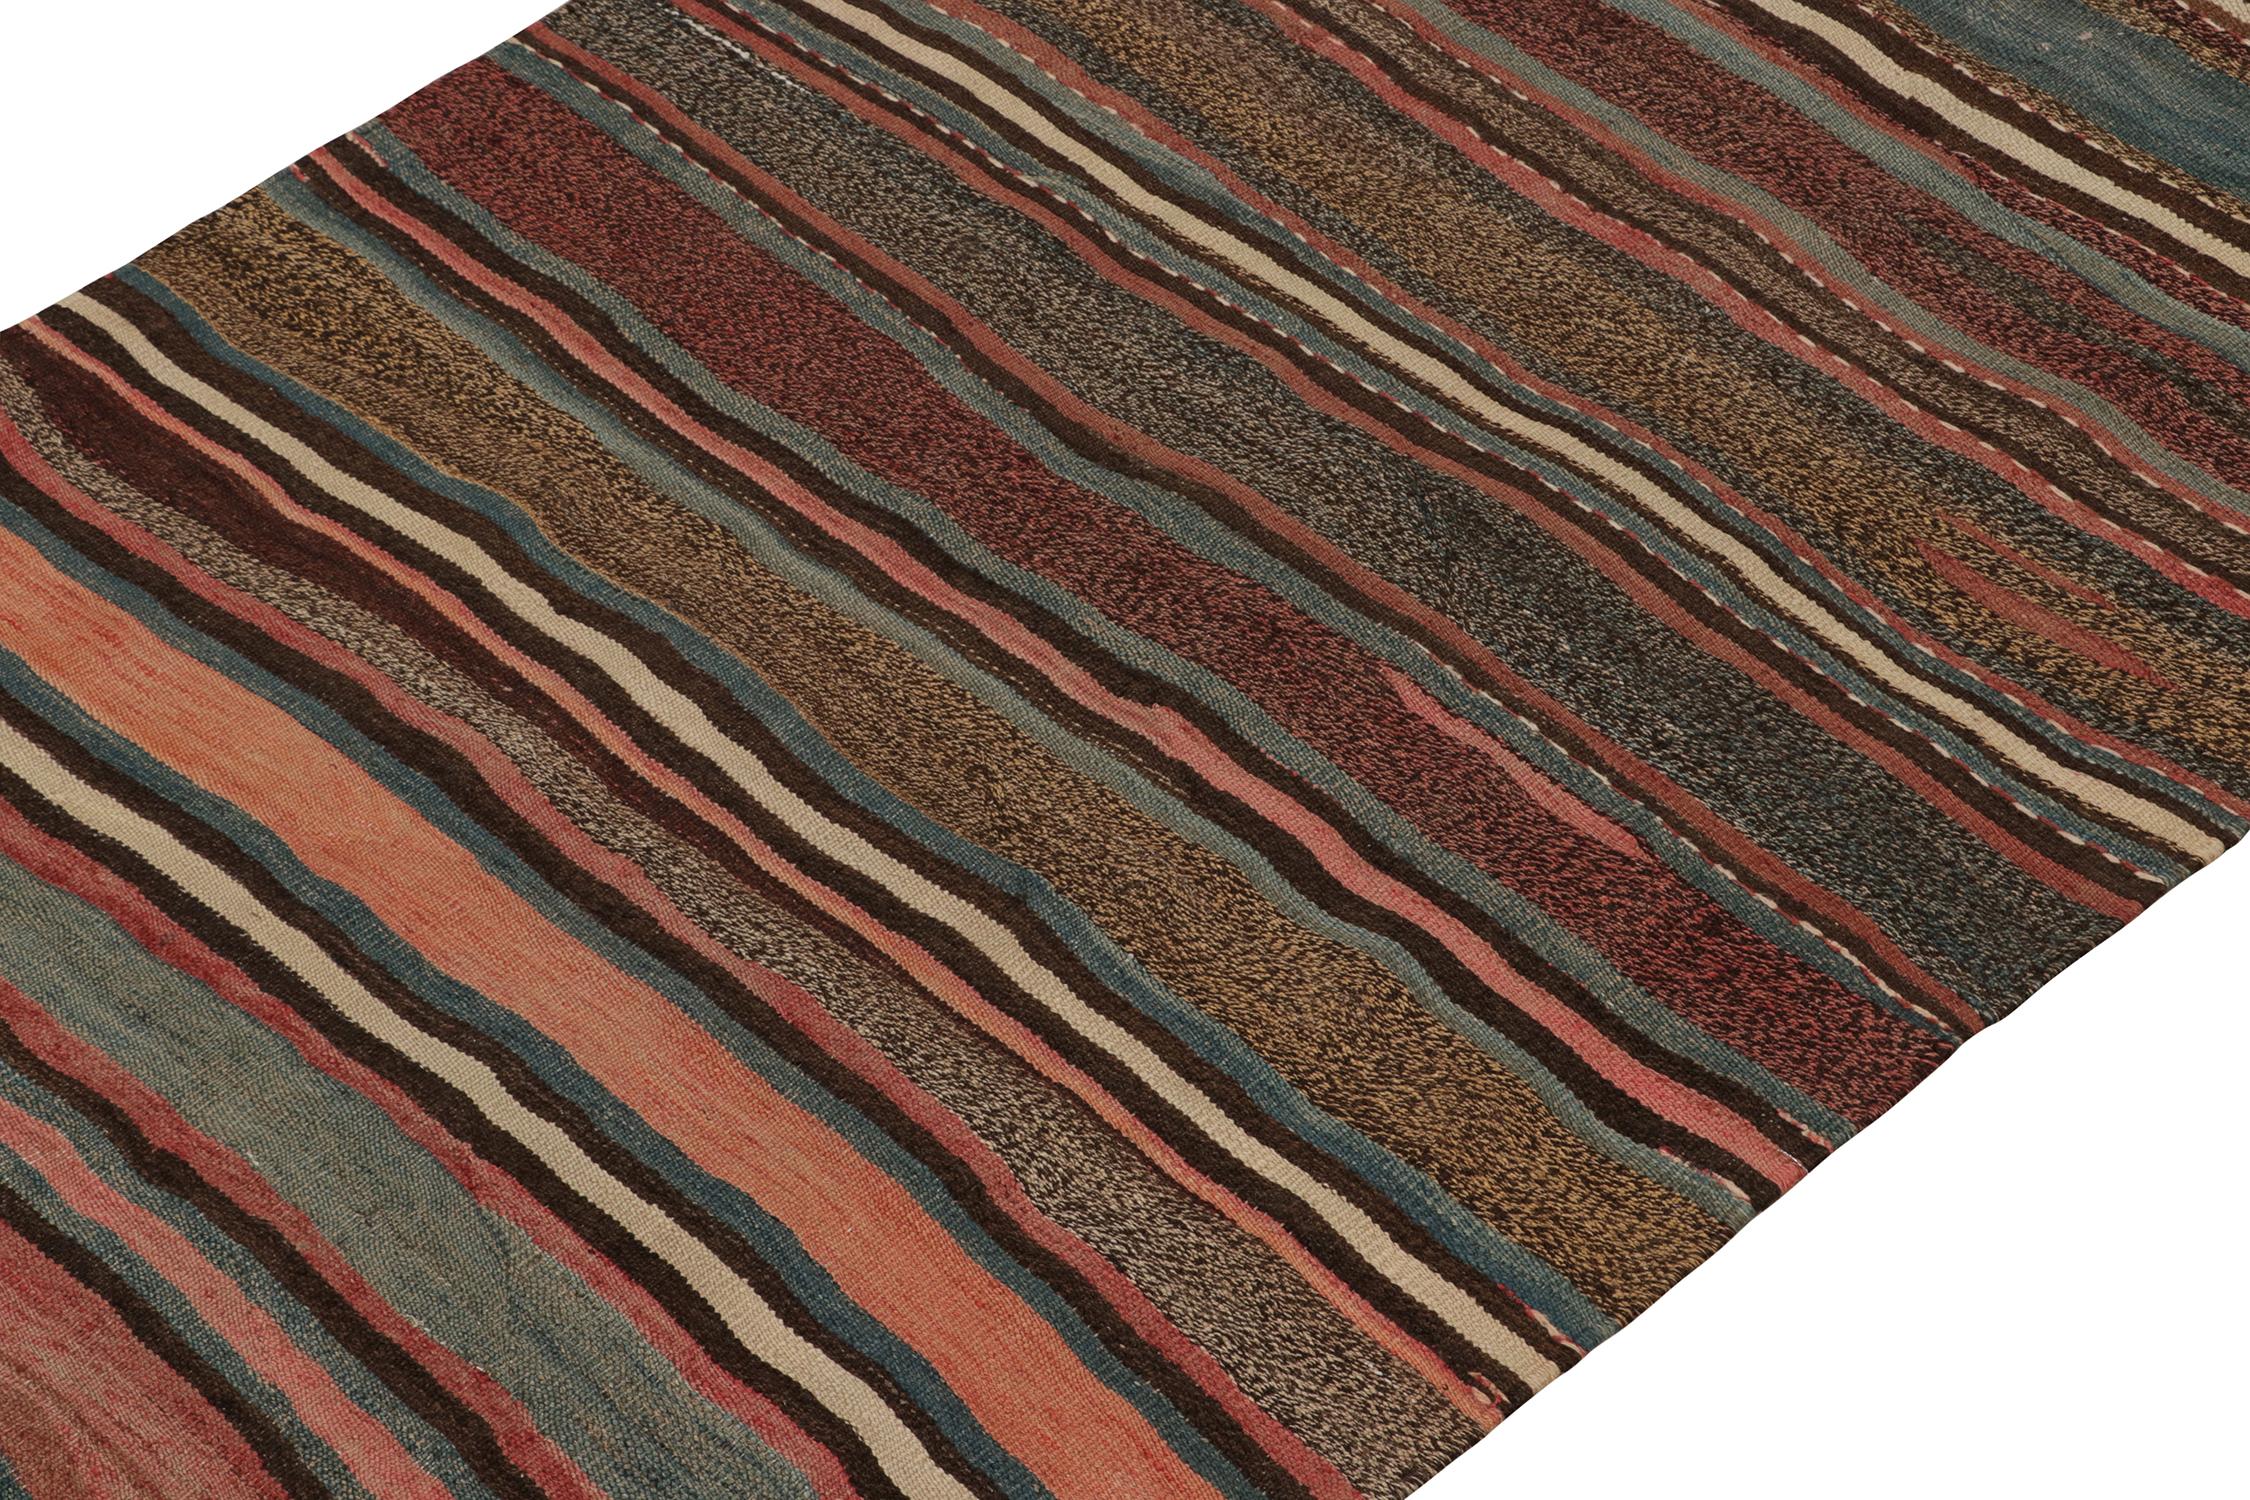 Turkish Vintage Shahsavan Persian Kilim Rug in Polychromatic Stripes by Rug & Kilim For Sale